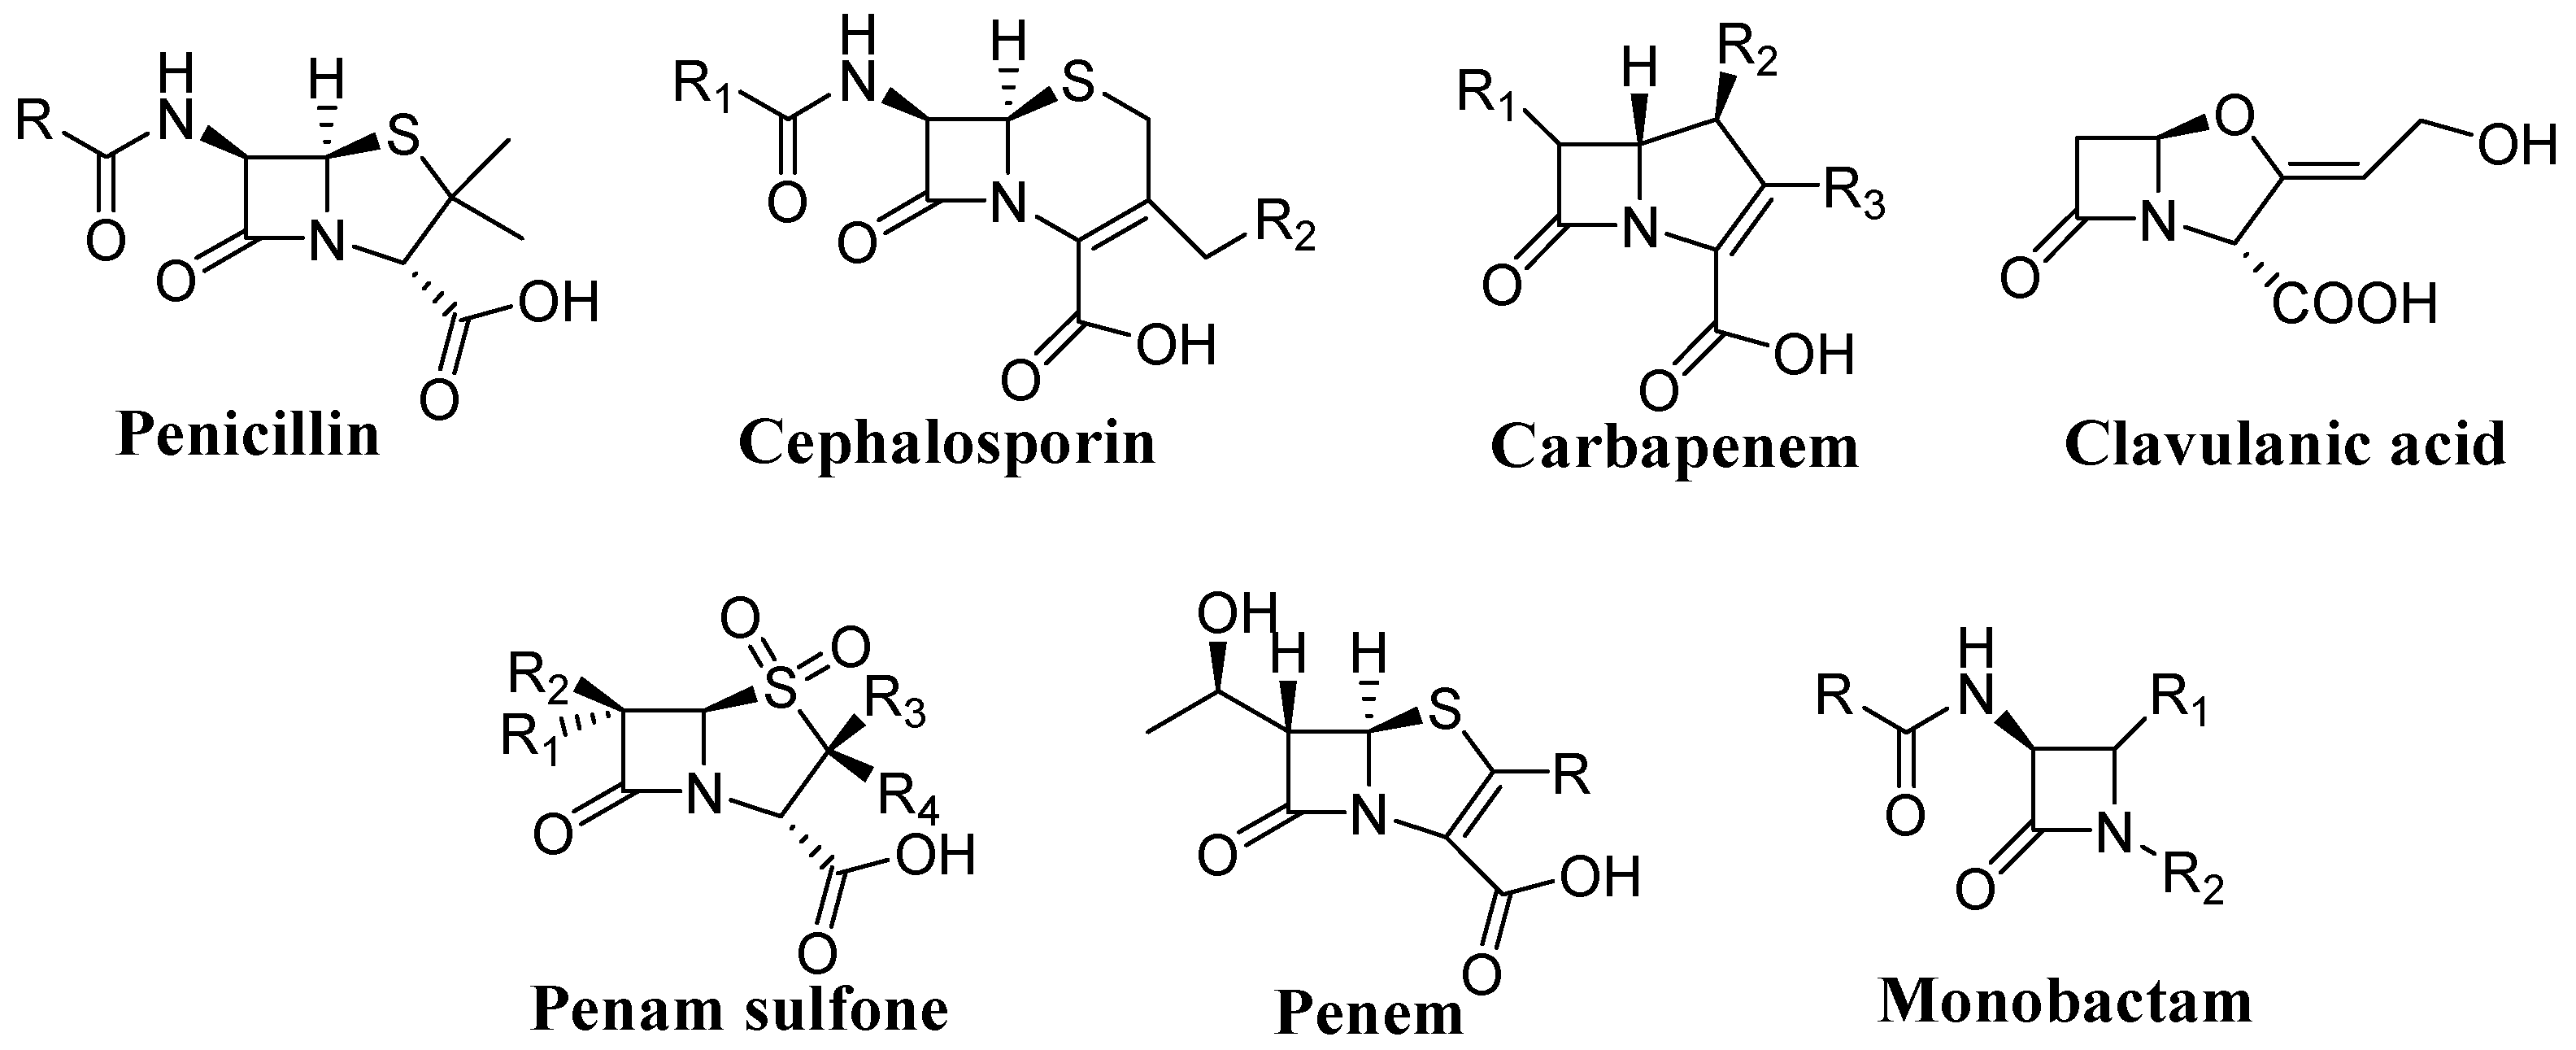 Синтез пенициллина